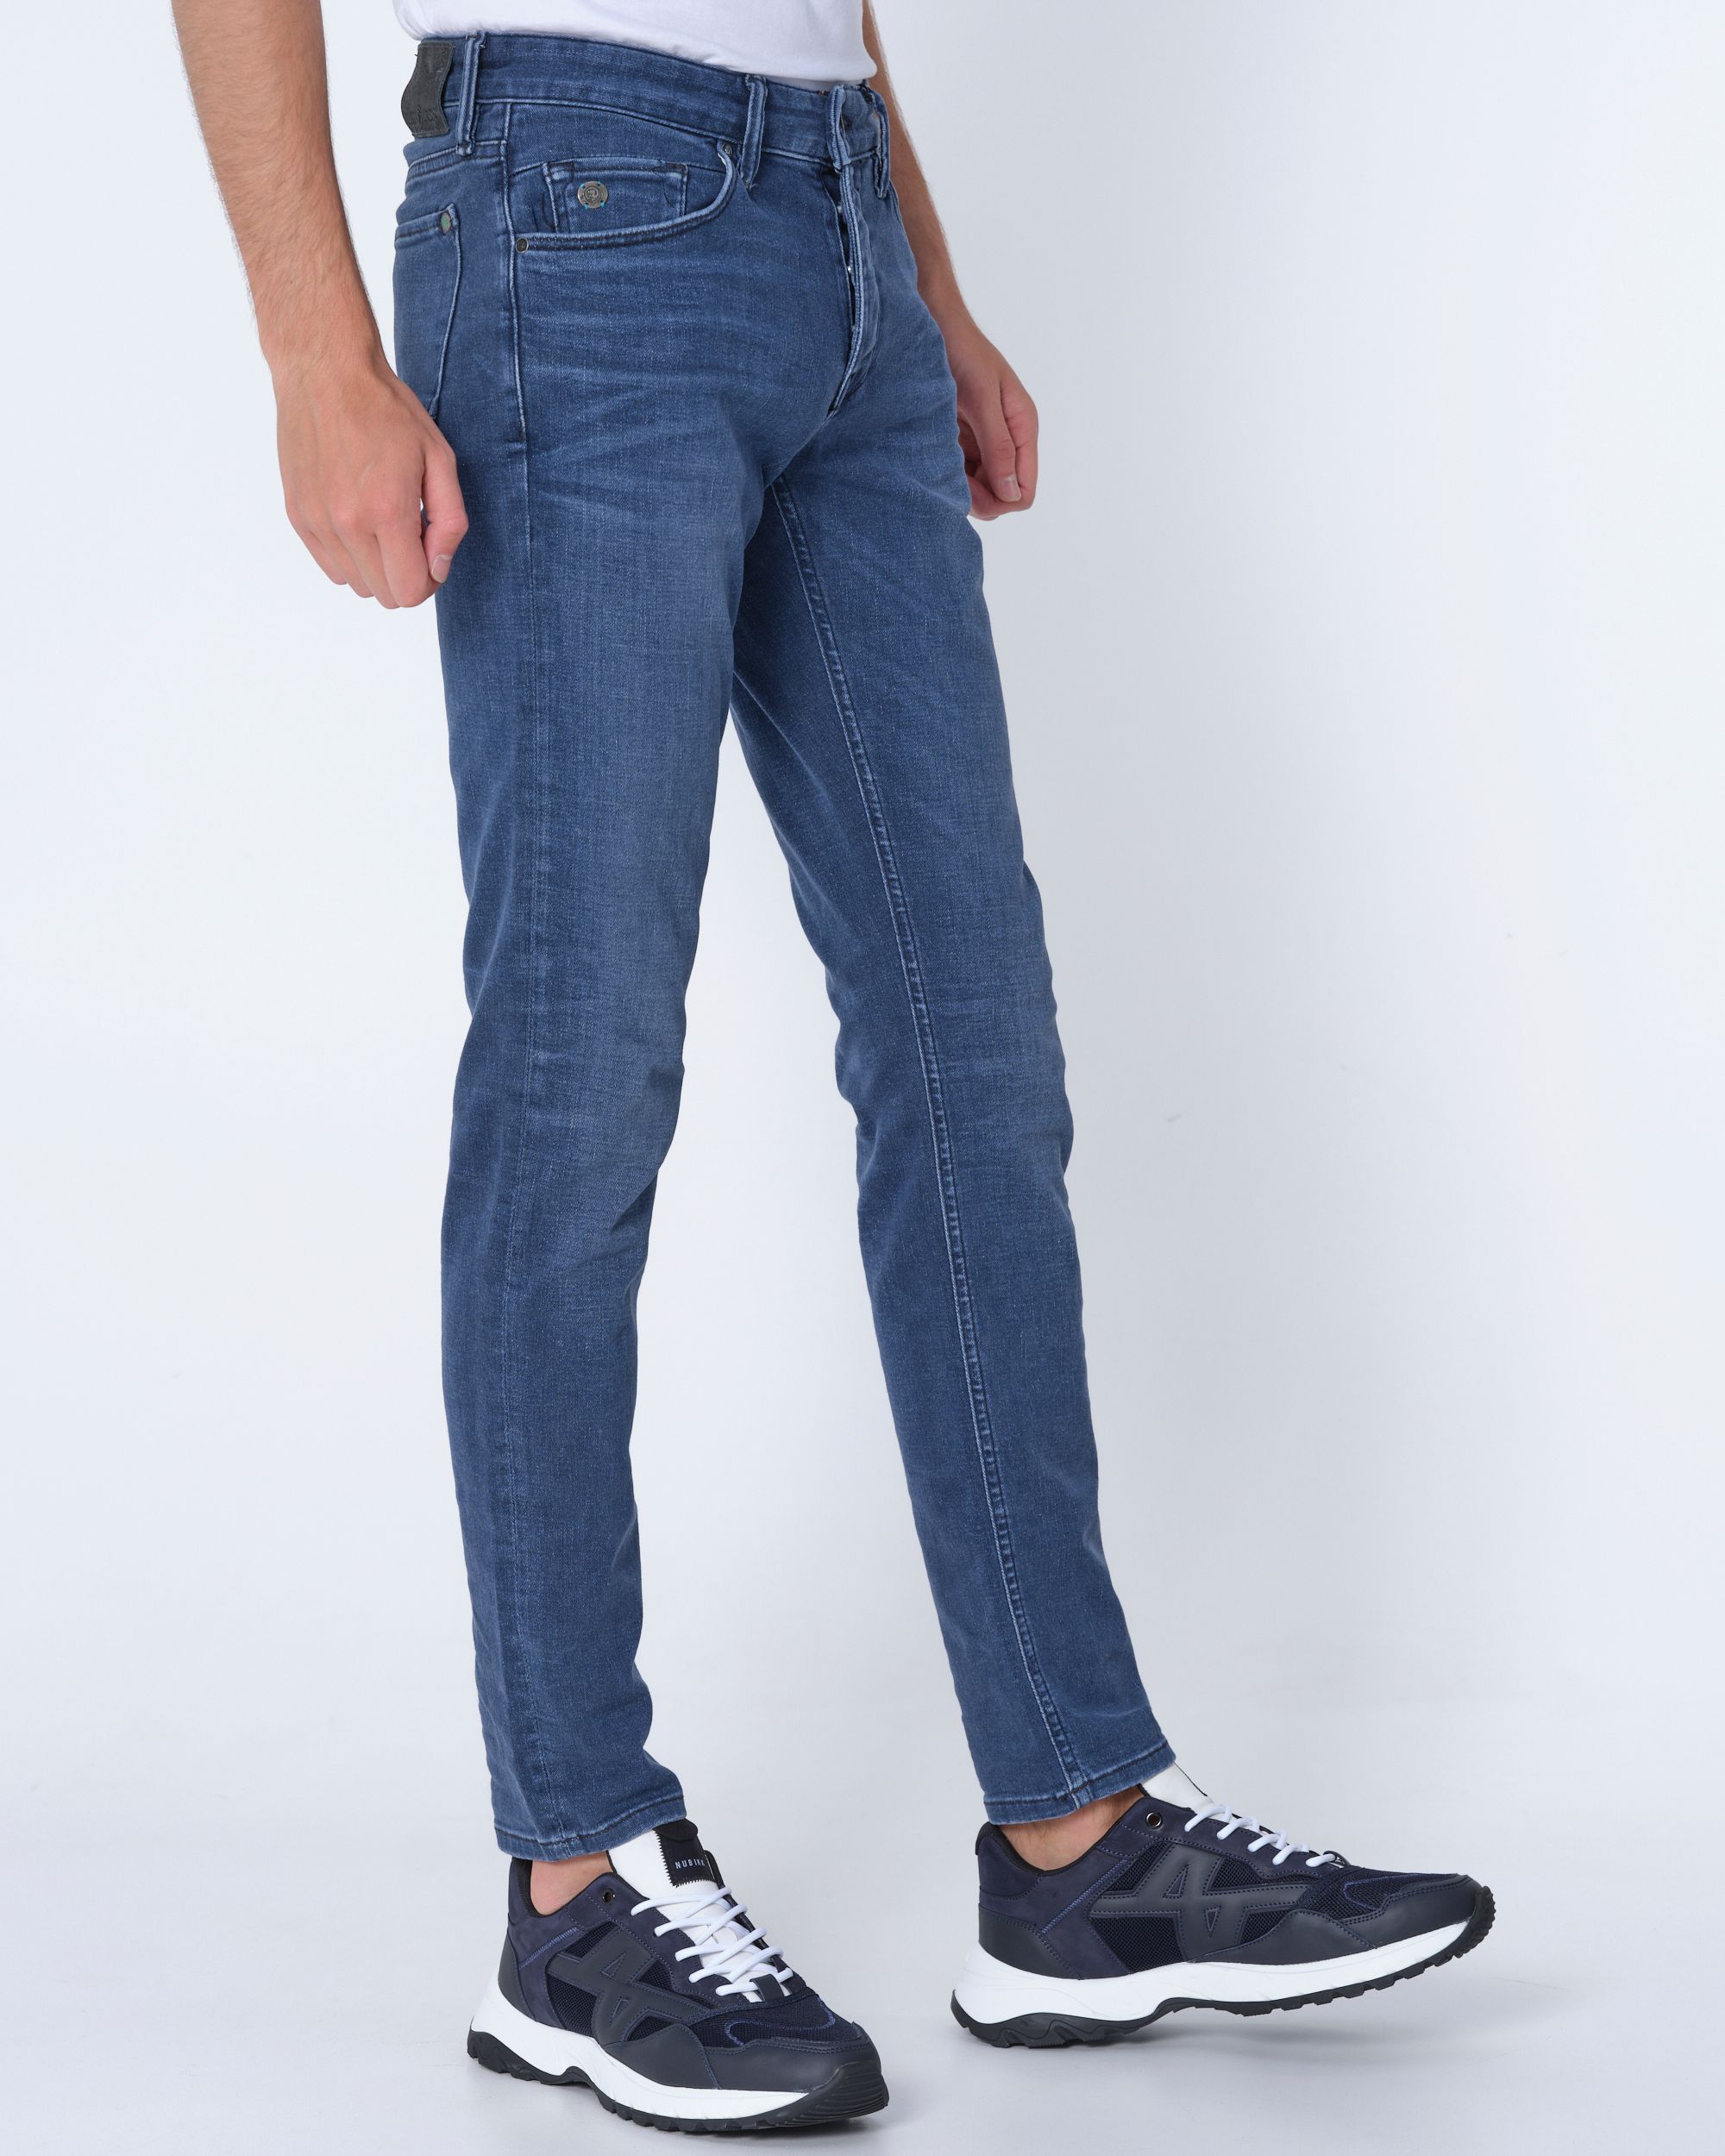 Cast Iron Riser Slim Fit Jeans Blauw 070839-001-28/32